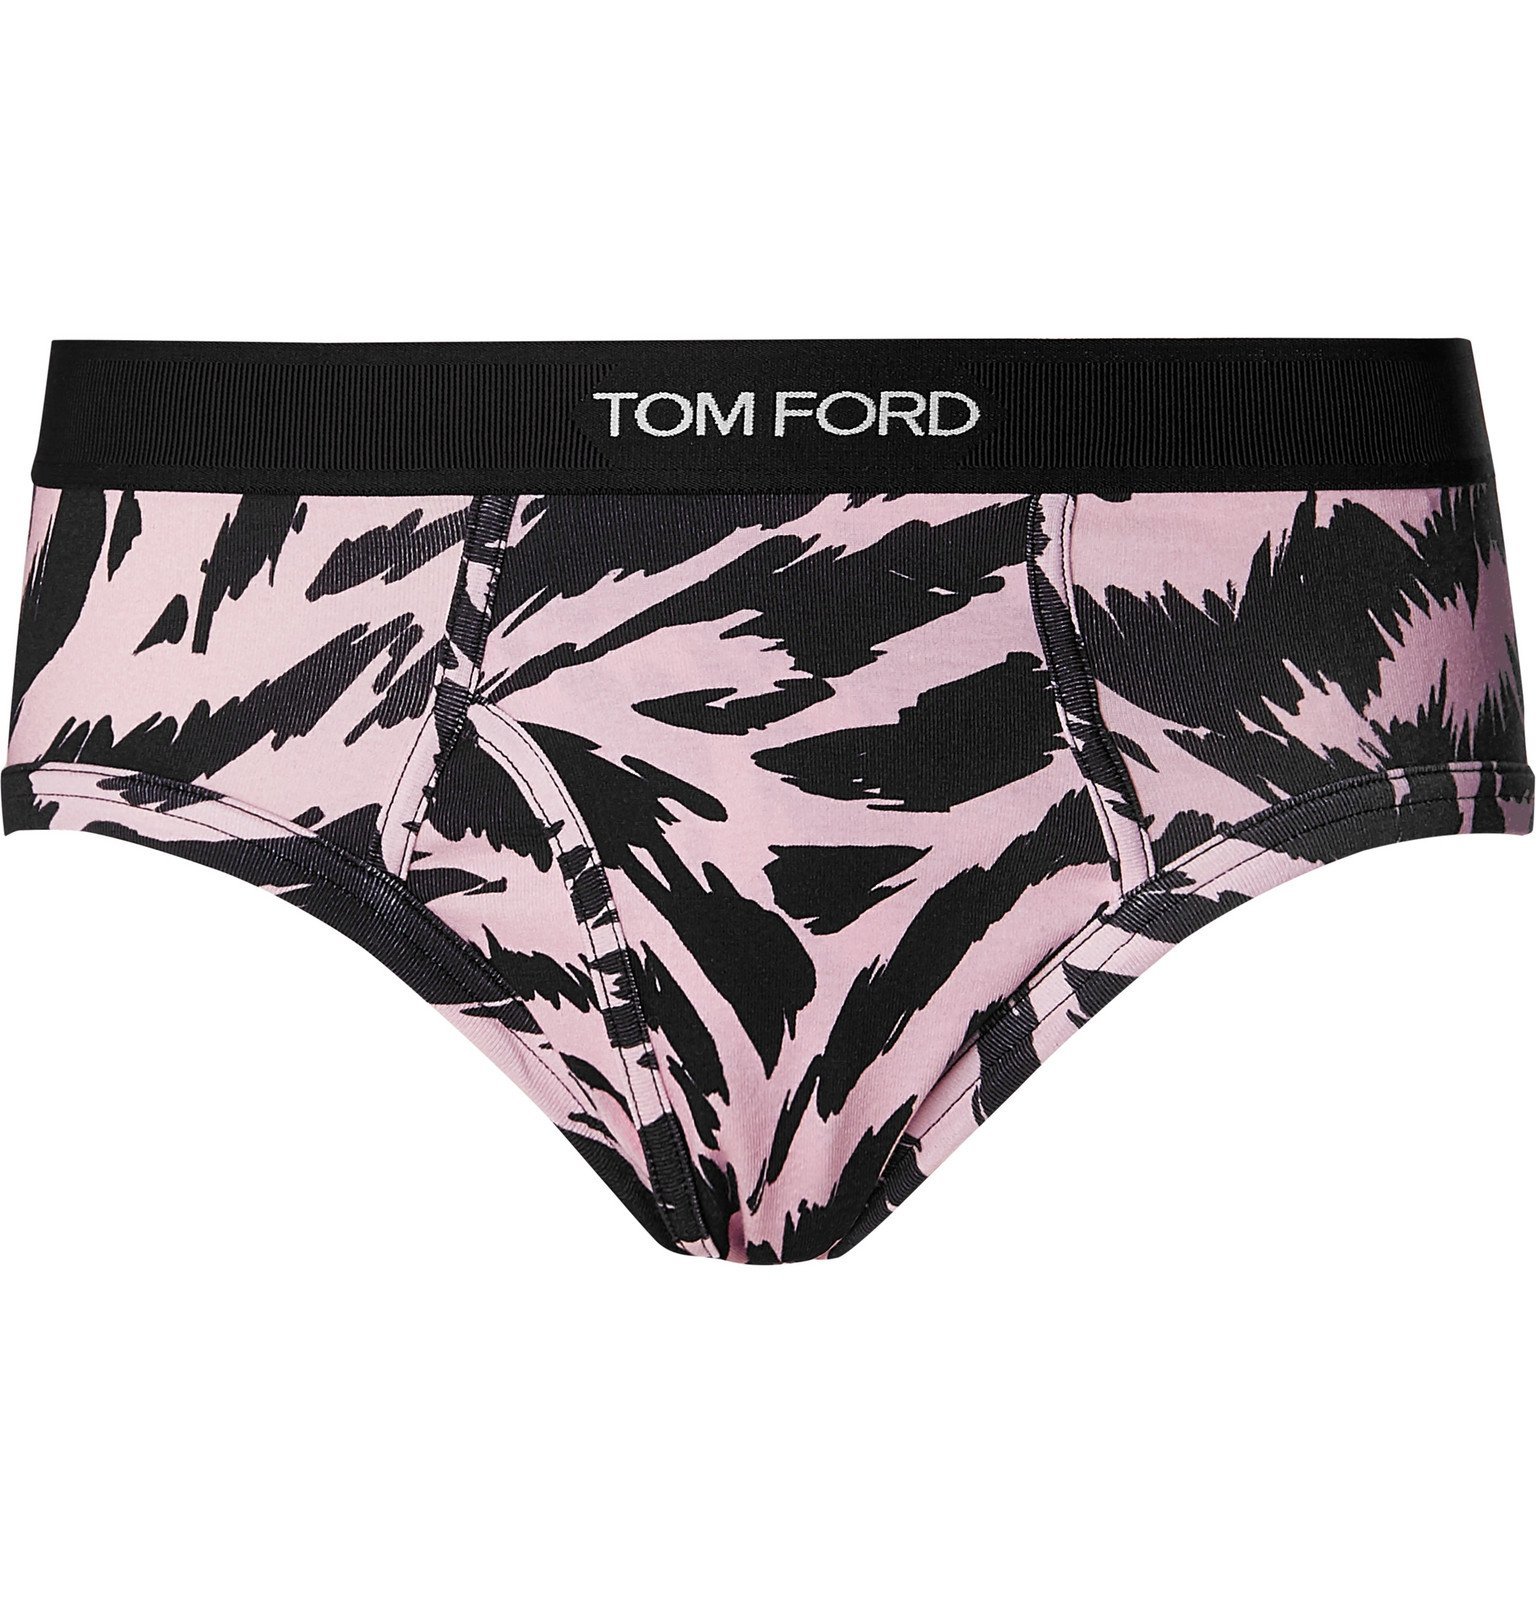 TOM FORD - Tiger-Print Stretch-Cotton Briefs - Pink TOM FORD